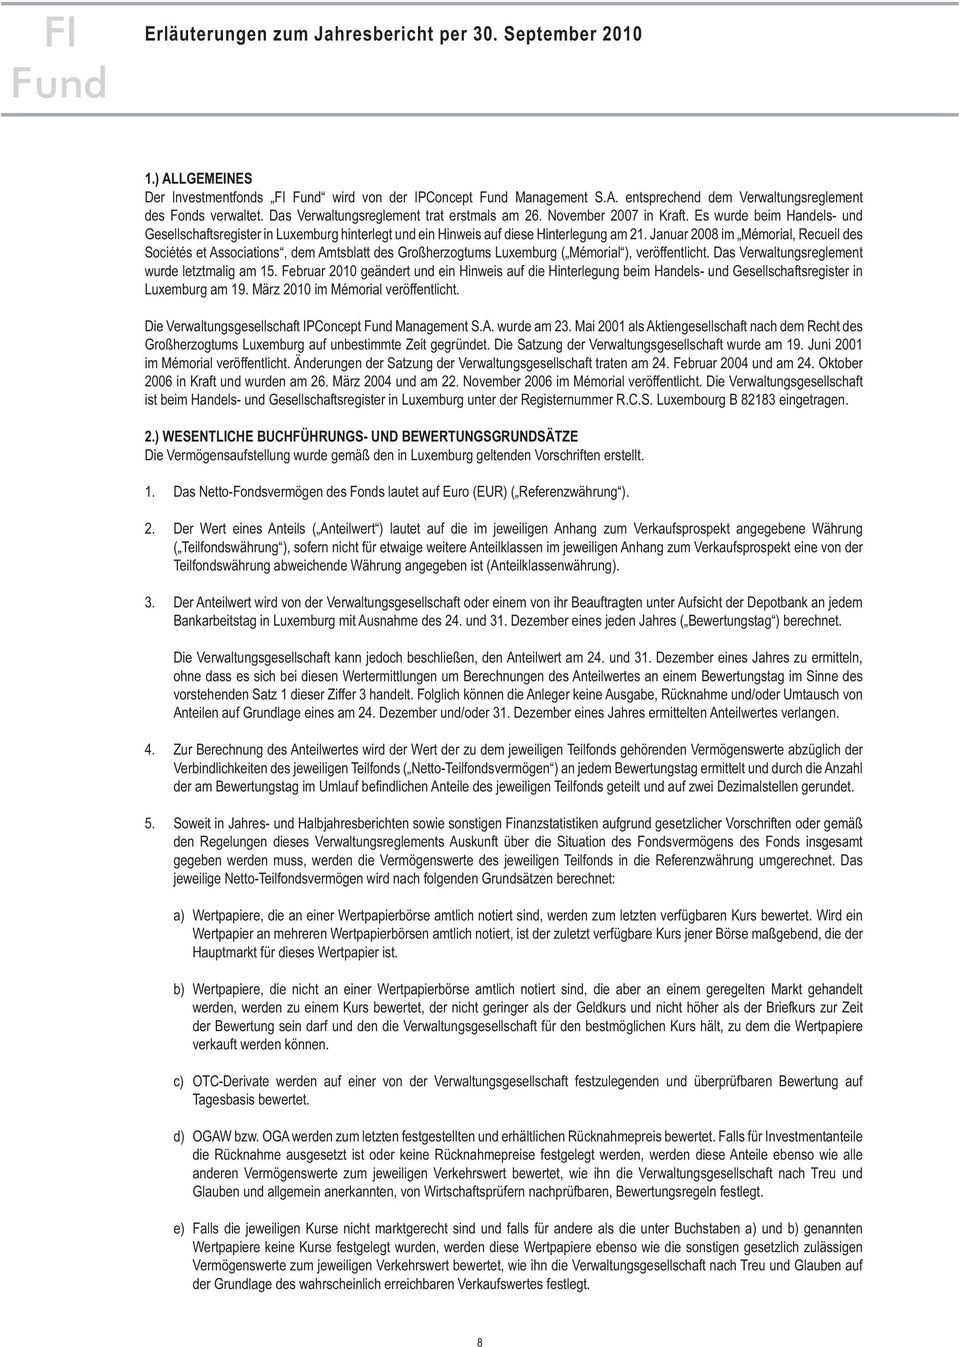 Januar 2008 im Mémorial, Recueil des Sociétés et Associations, dem Amtsblatt des Großherzogtums Luxemburg ( Mémorial ), veröffentlicht. Das Verwaltungsreglement wurde letztmalig am 15.